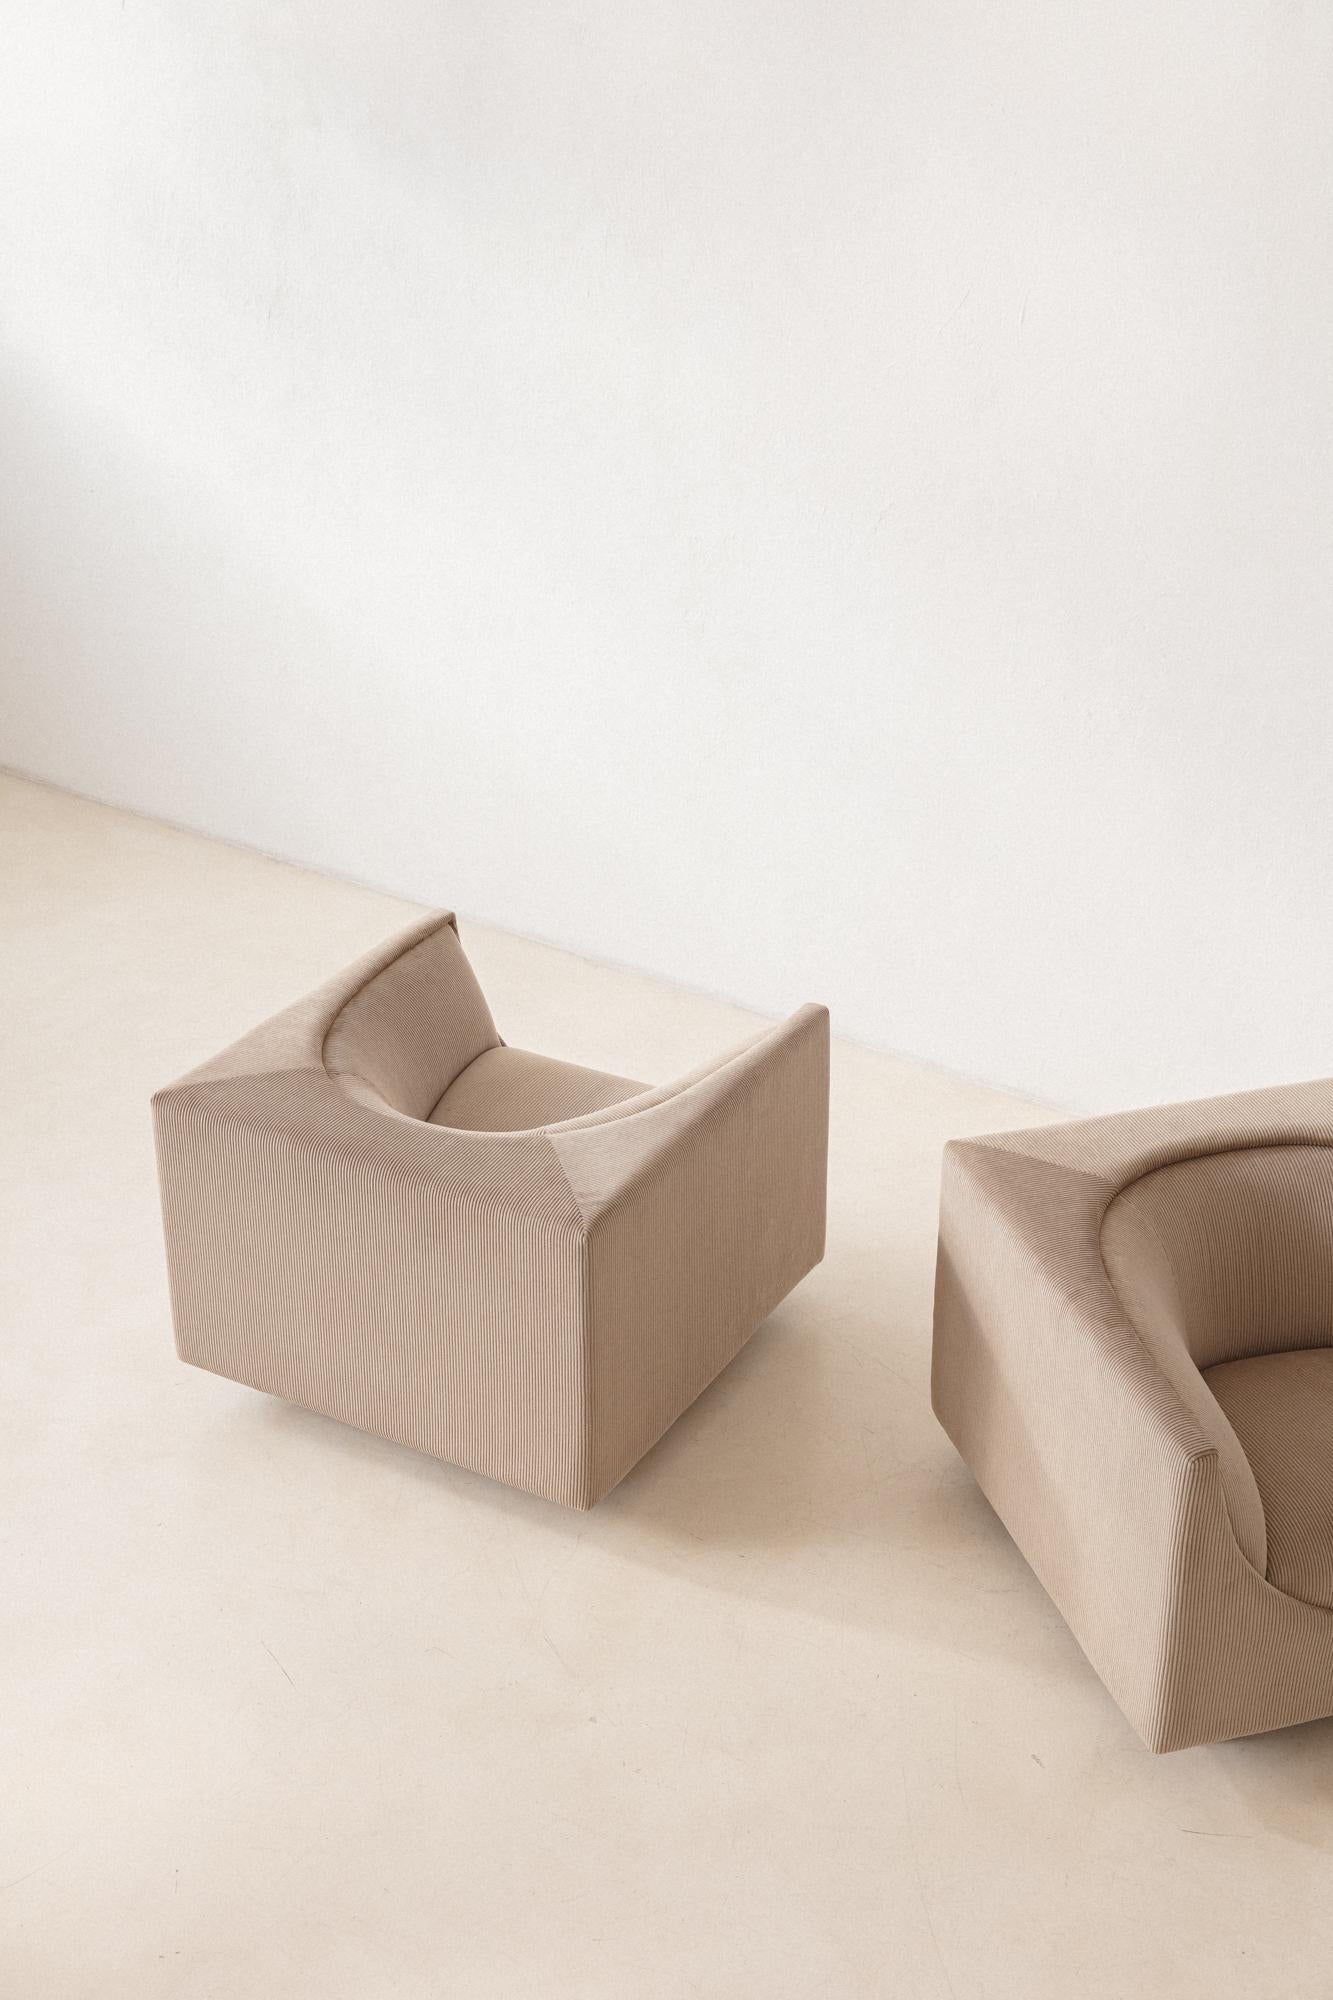 Late 20th Century Mid-Century Modern Cube Armchairs by Brazilian Designer Jorge Zalszupin, 1970s For Sale